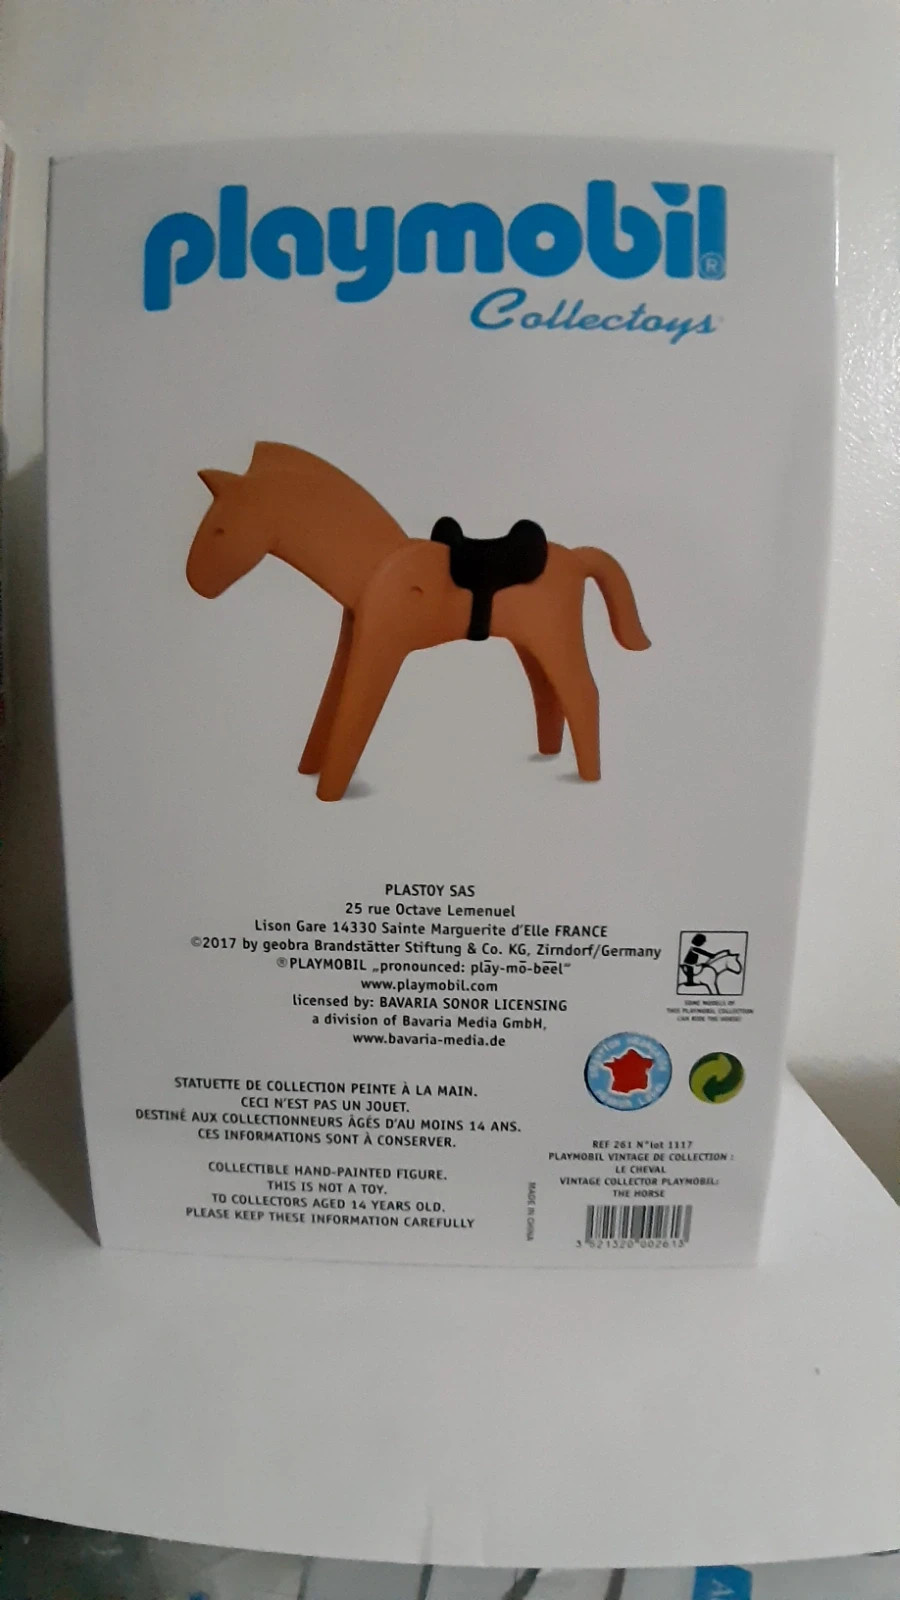 Le cheval Playmobil Collectoys de Plastoy